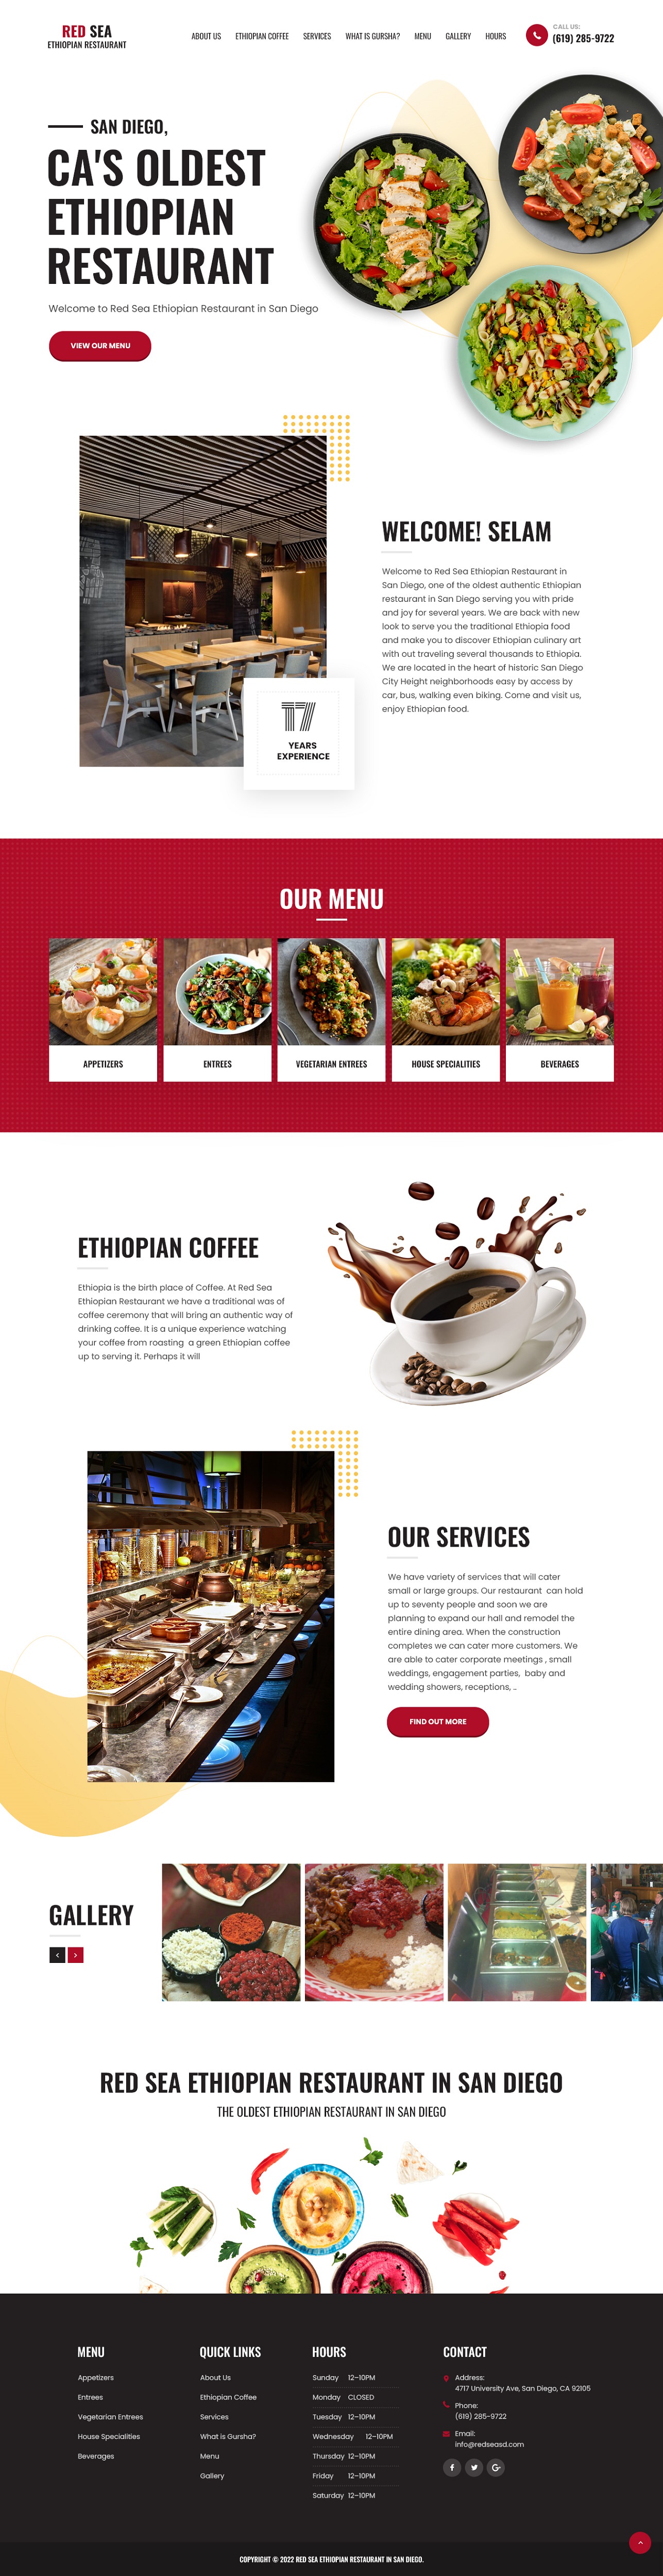 Restaurant website design example